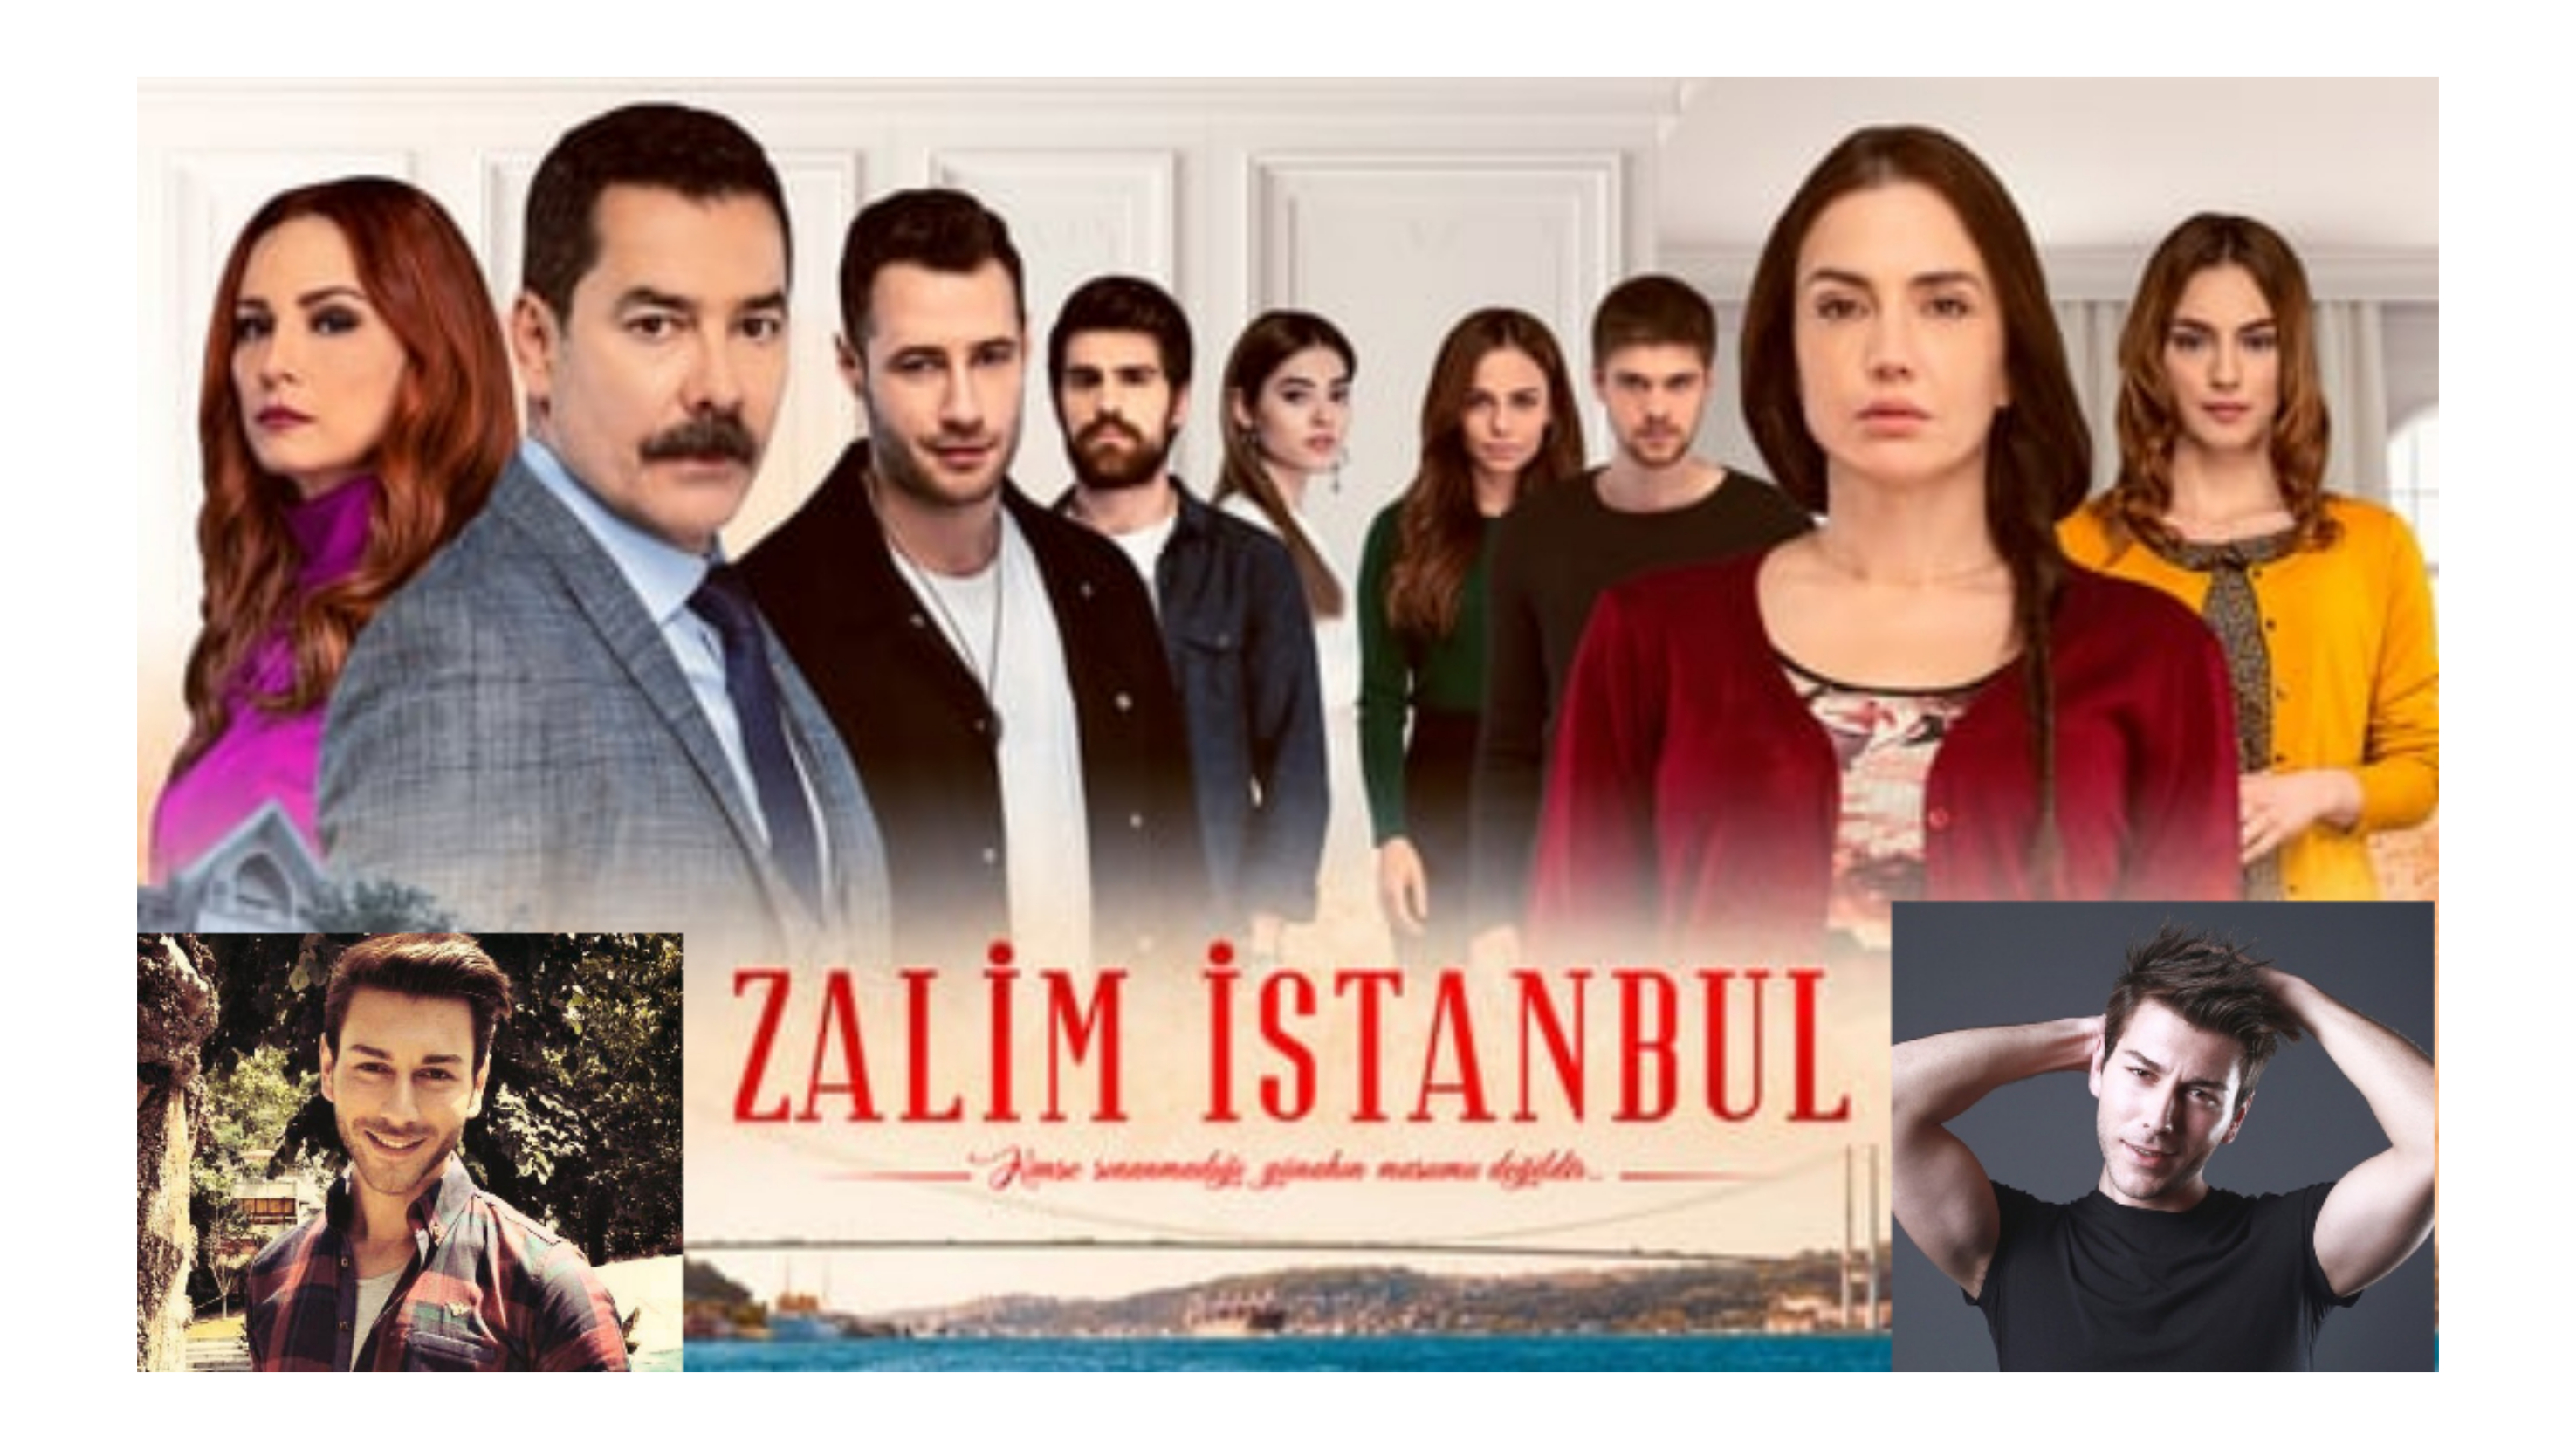 Zalim İstanbul Incollage_20200126_124255744